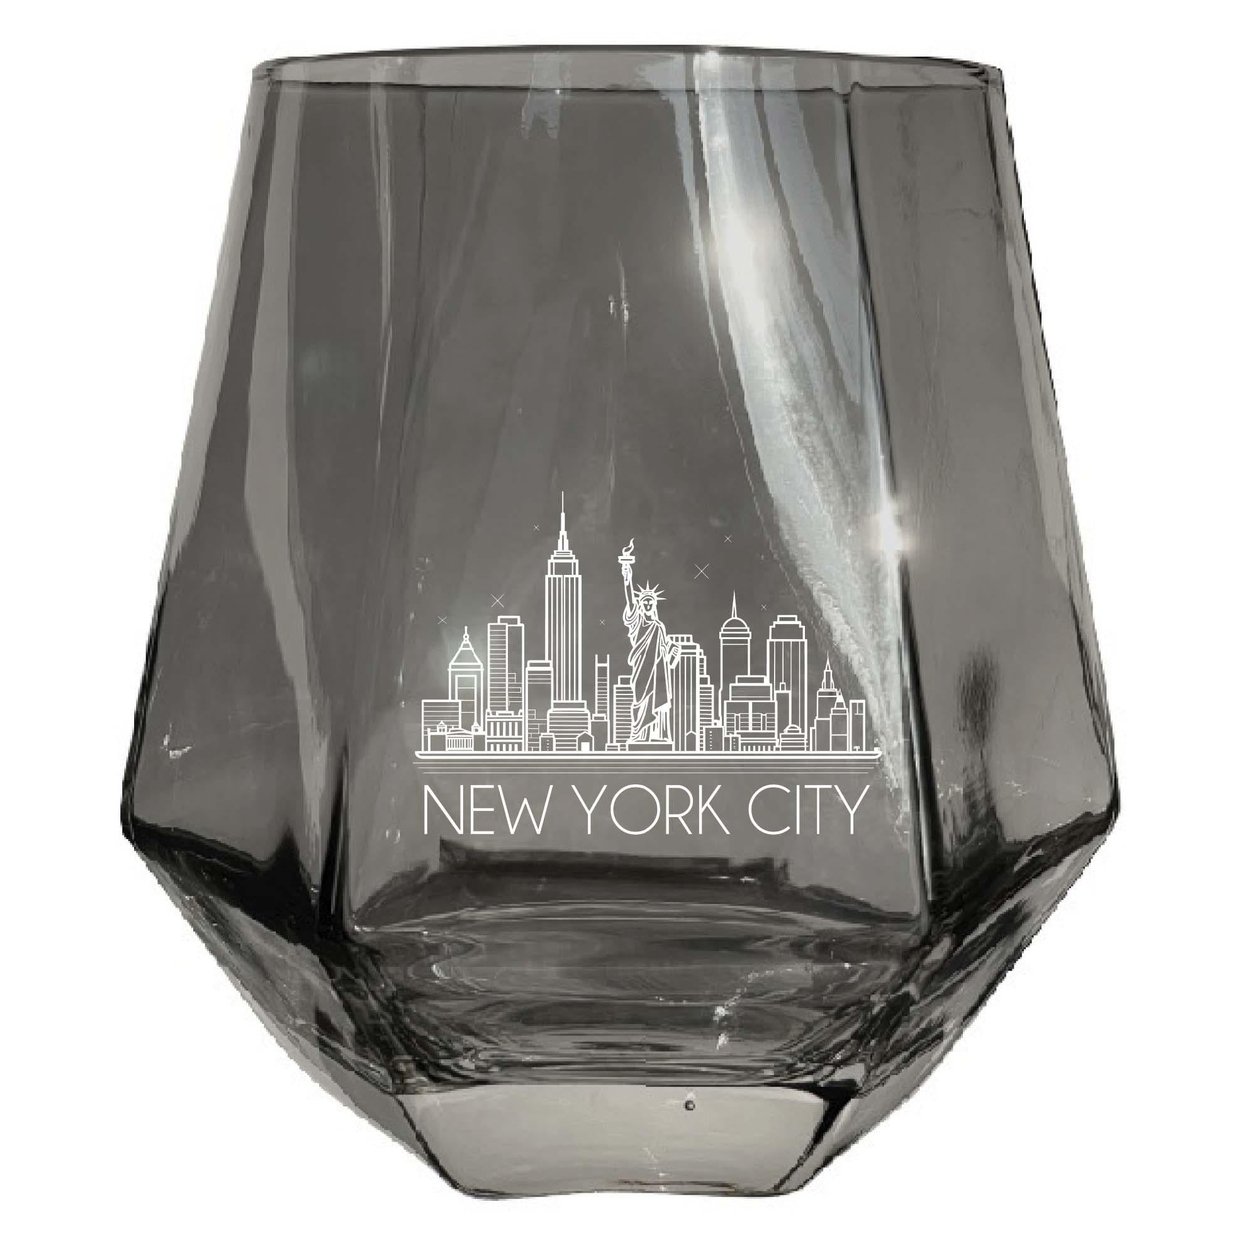 New York City Souvenir Wine Glass EngravedDiamond 15 Oz - Clear,,Single Unit